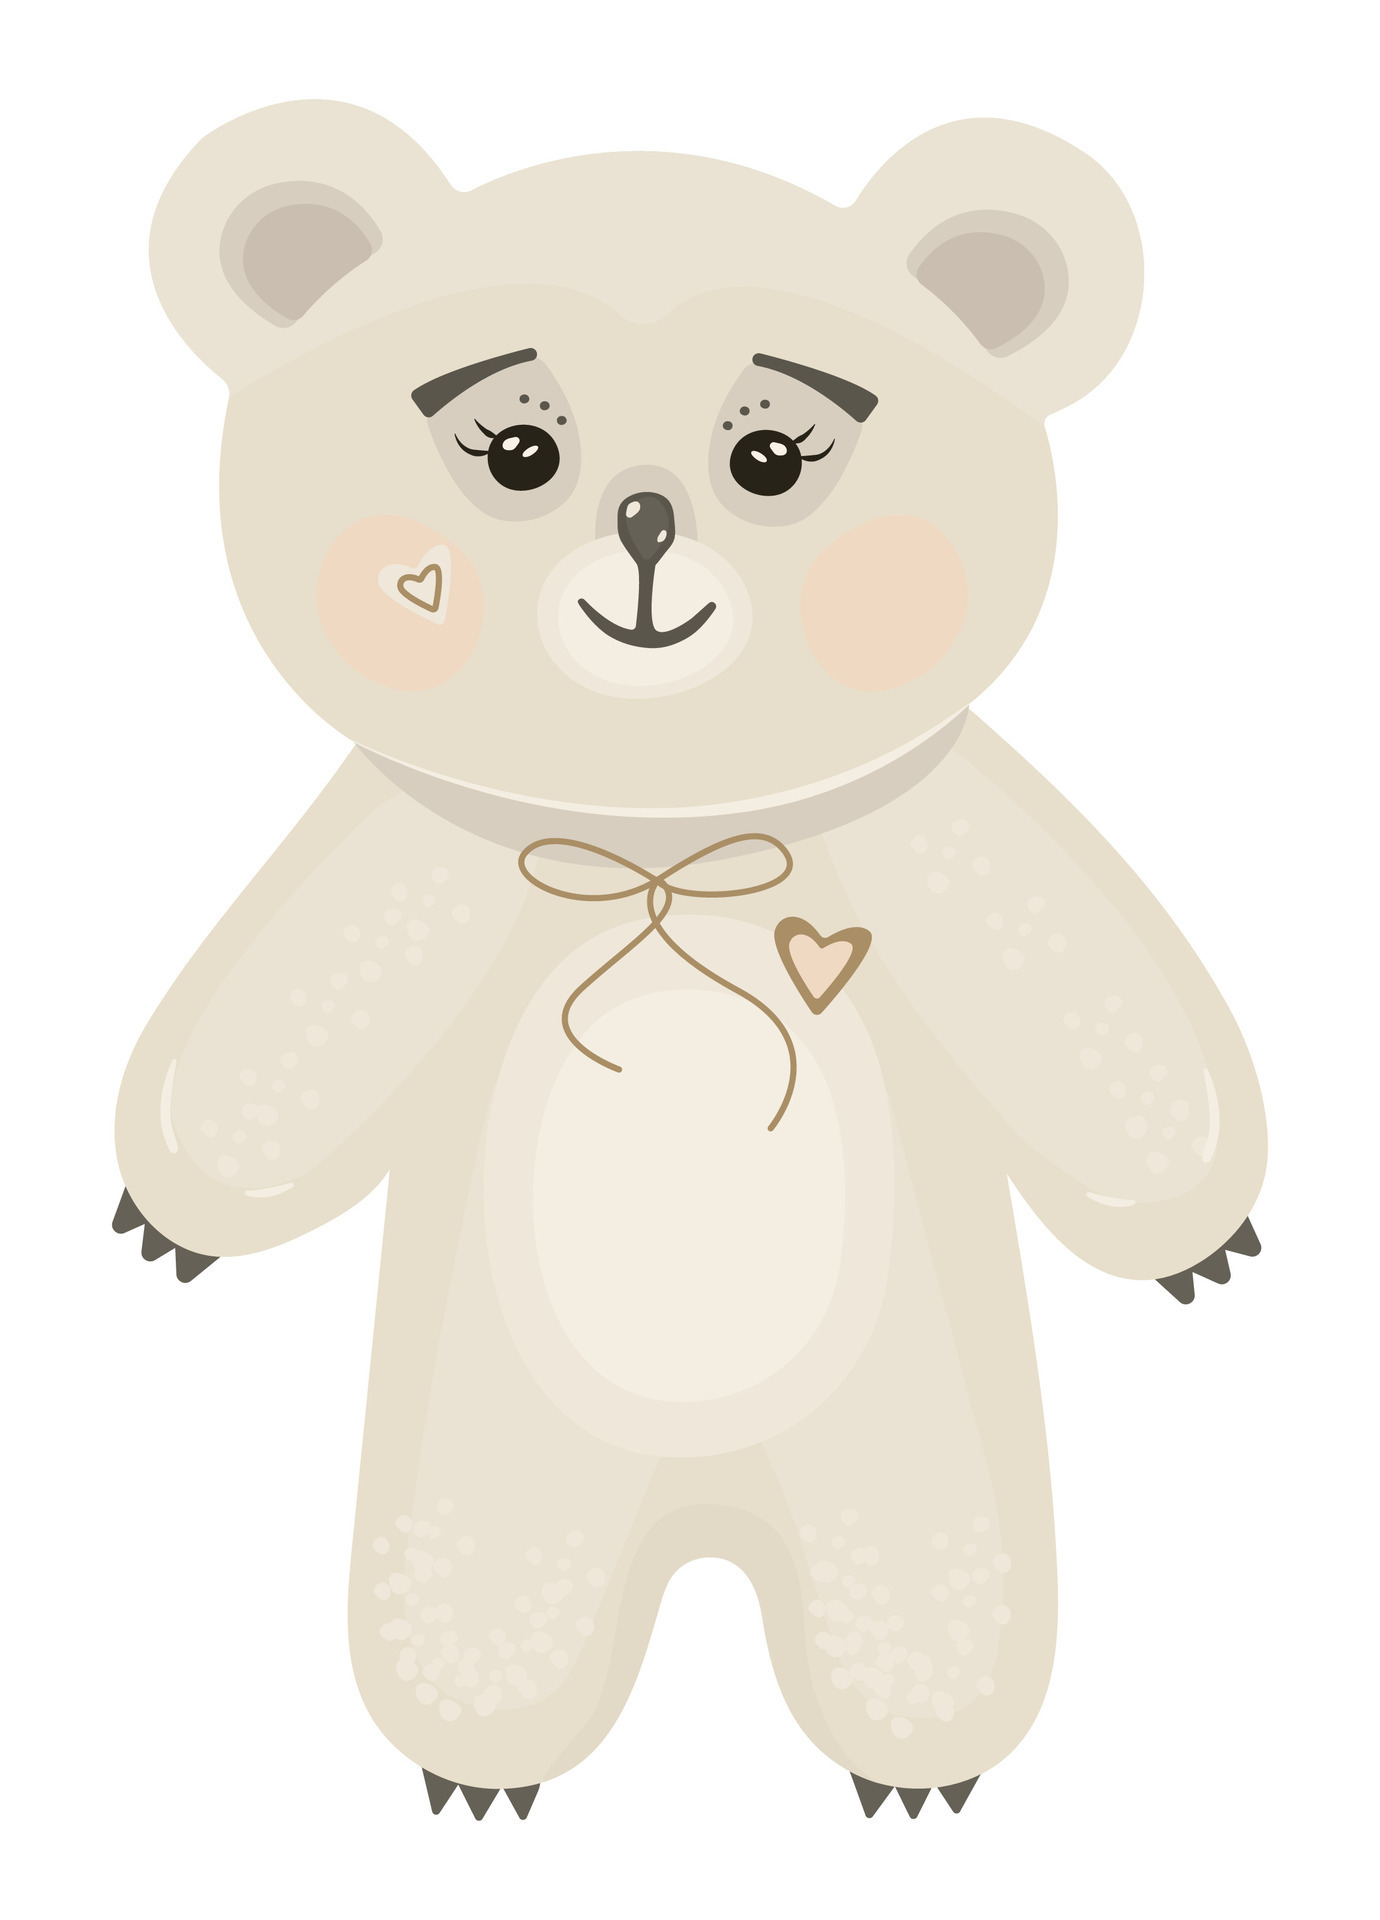 Cute white bear kawaii boho style, preppy shirt print illustration ...